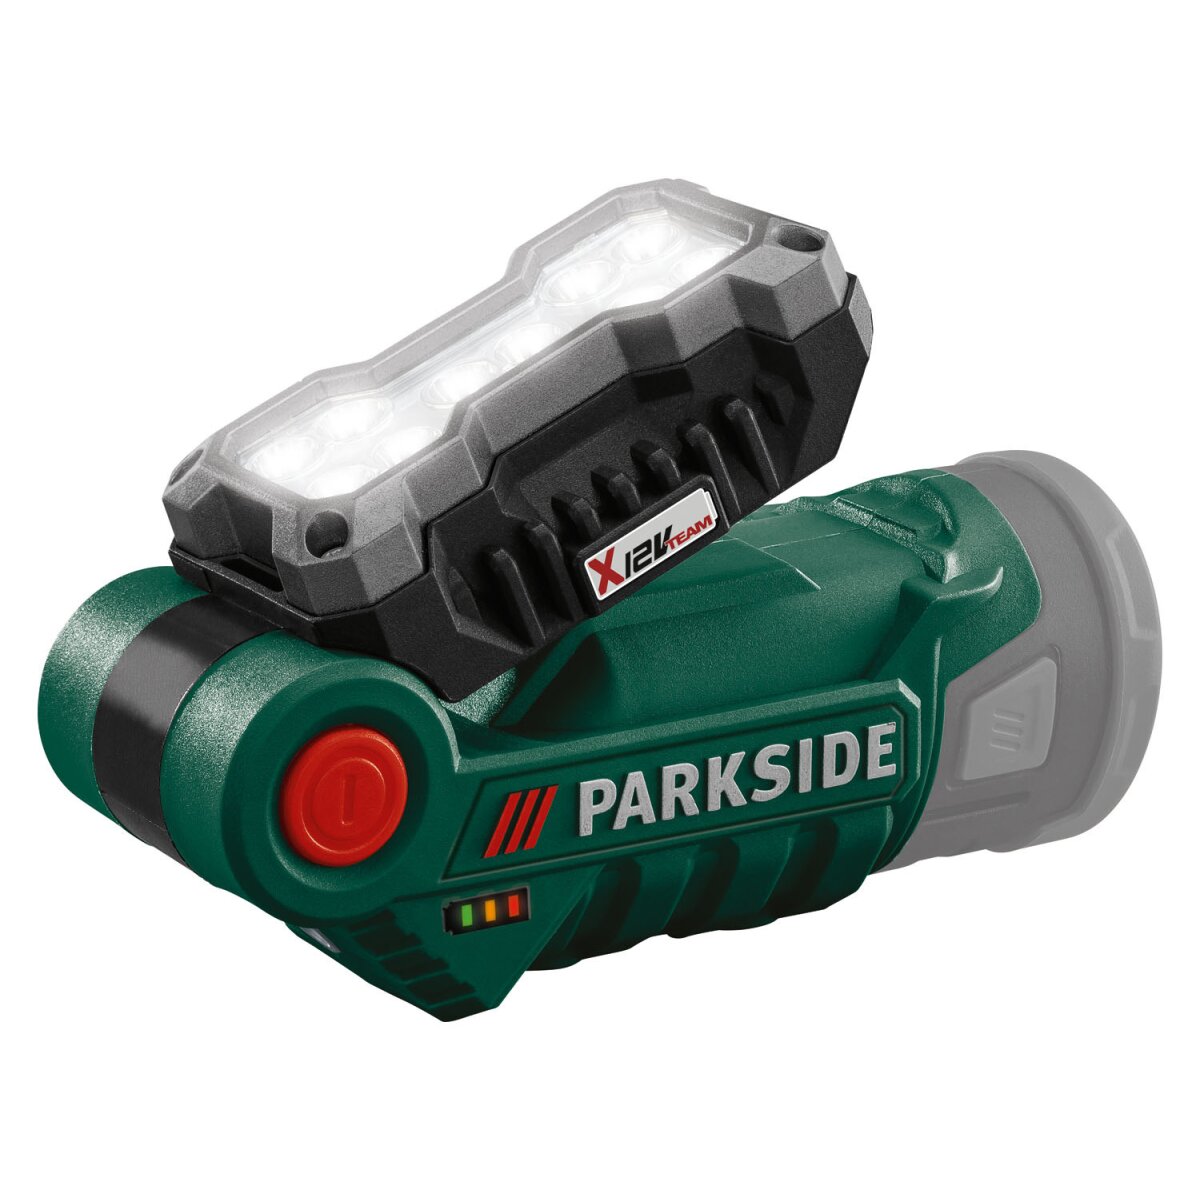 PARKSIDE® 12 V Akku-LED-Arbeitslicht »PLLA 12 B2«, ohne Akku und Ladegerät  - B-Ware neuwertig, 14,99 €